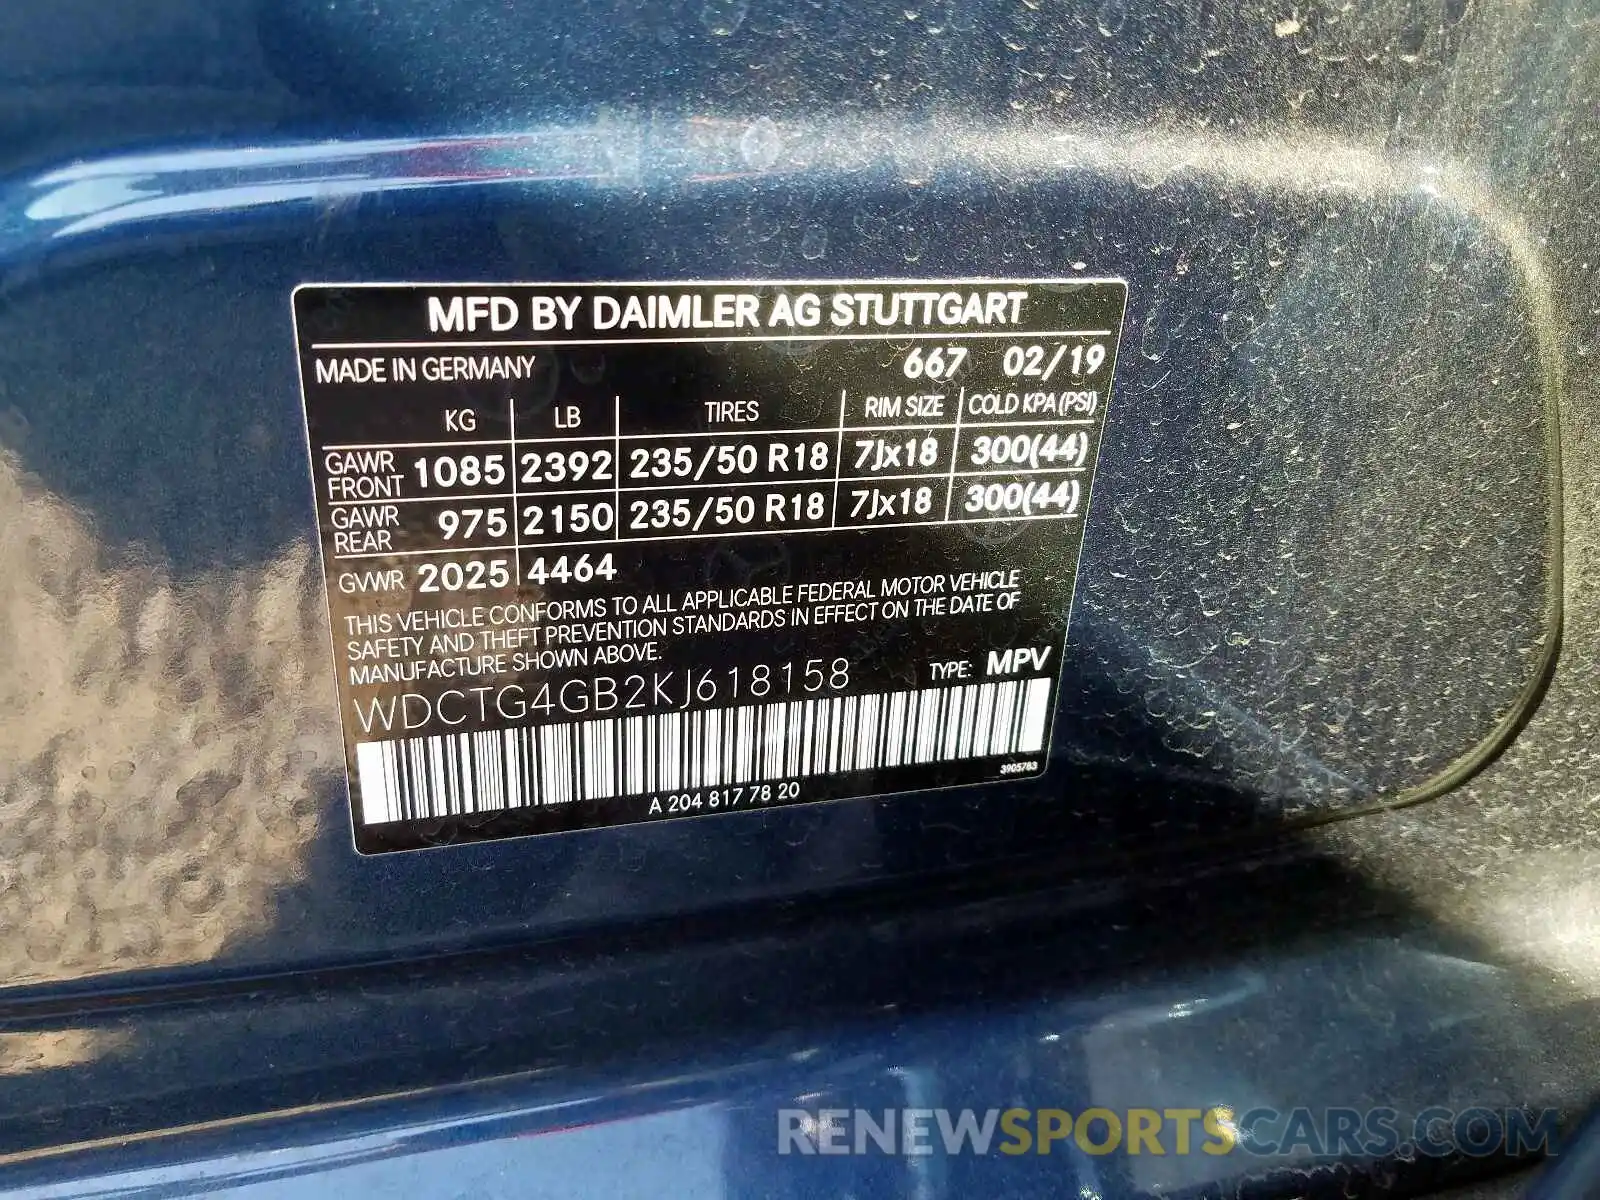 10 Photograph of a damaged car WDCTG4GB2KJ618158 MERCEDES-BENZ GLA 250 4M 2019